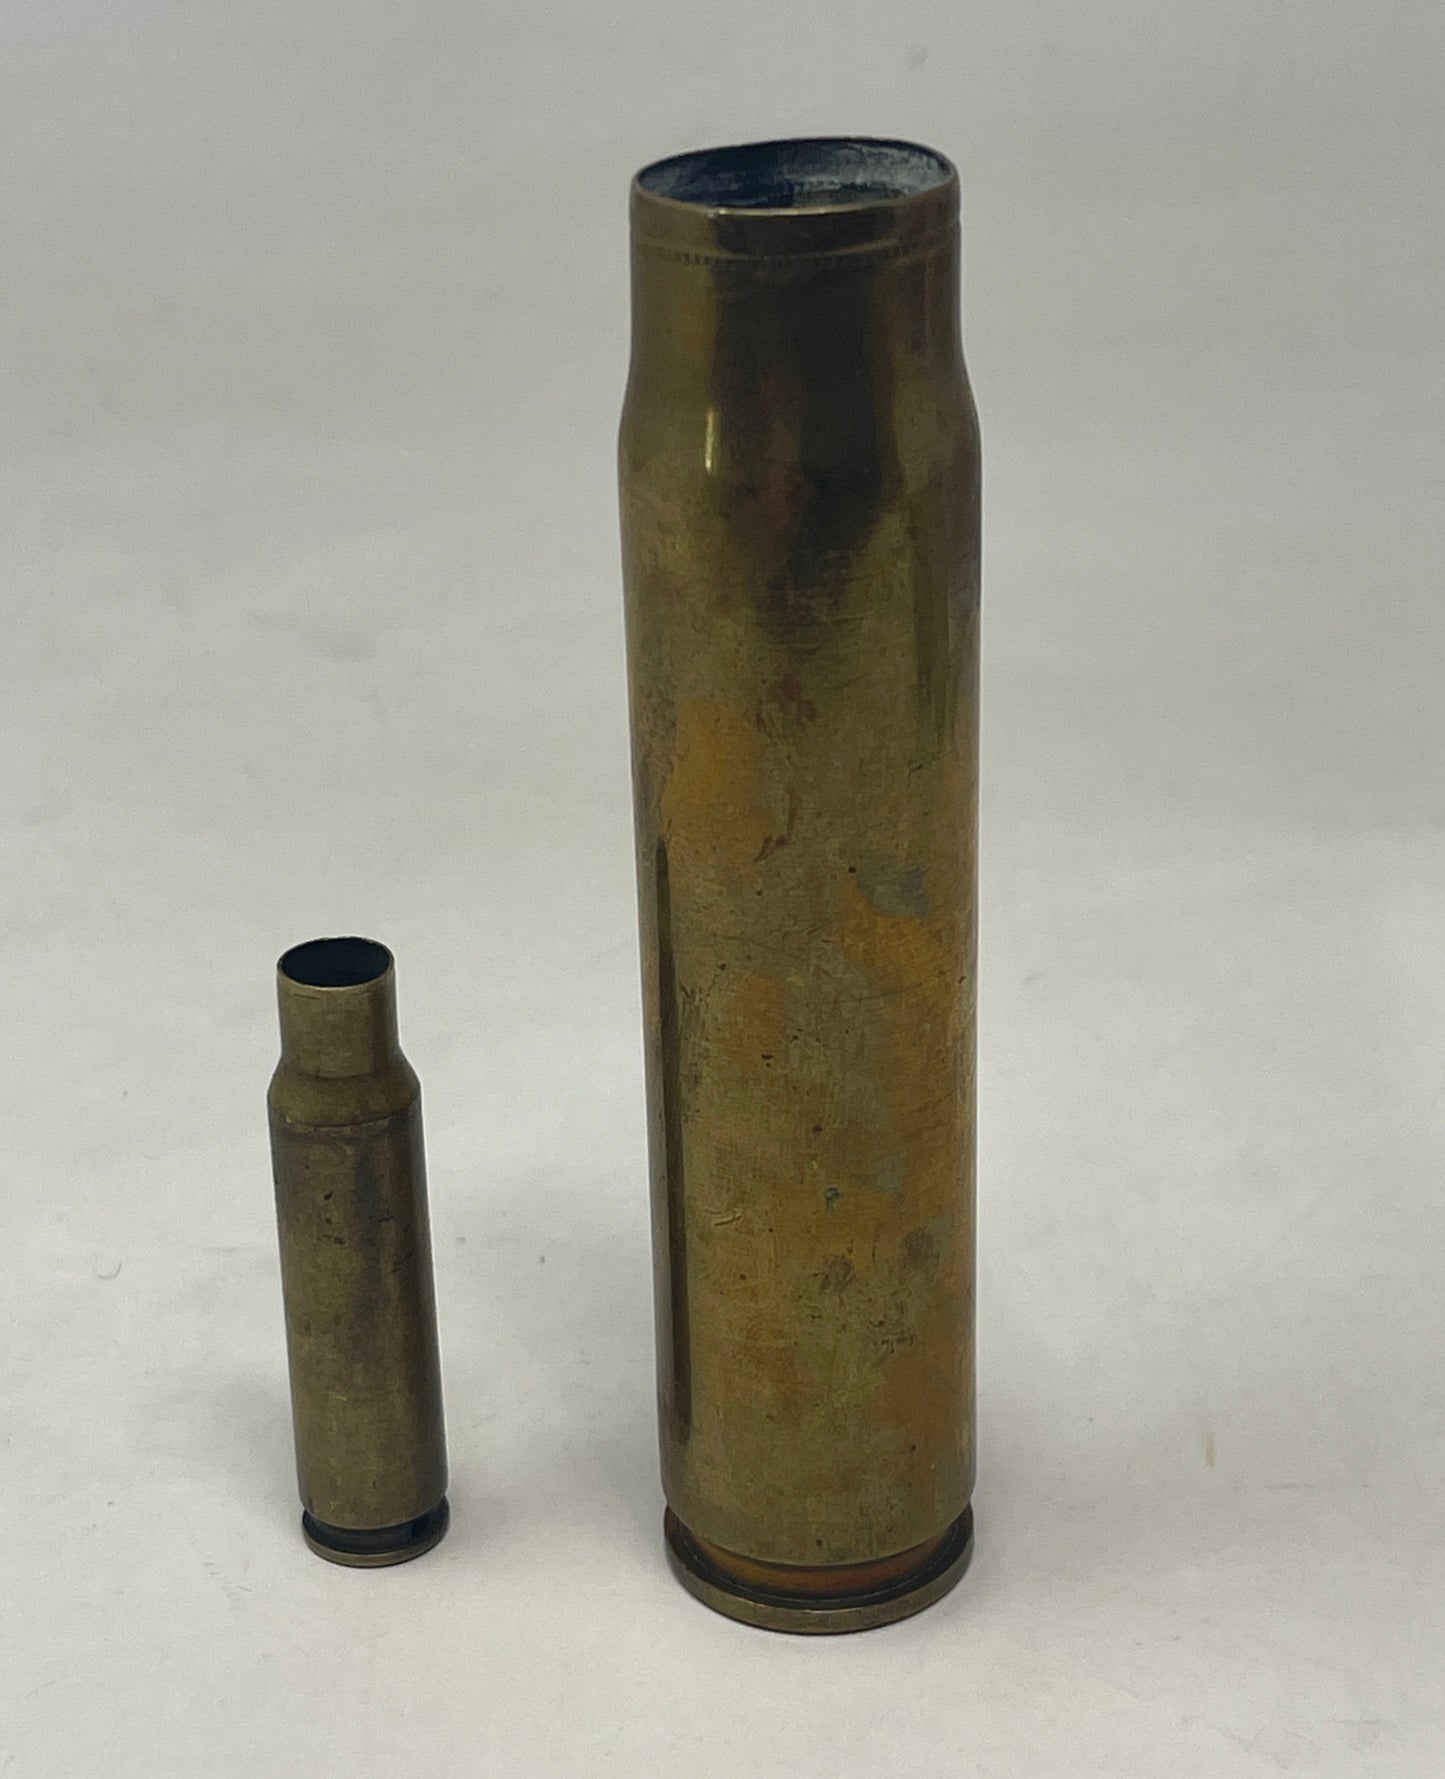 20mm Ammunition Shell Casing 